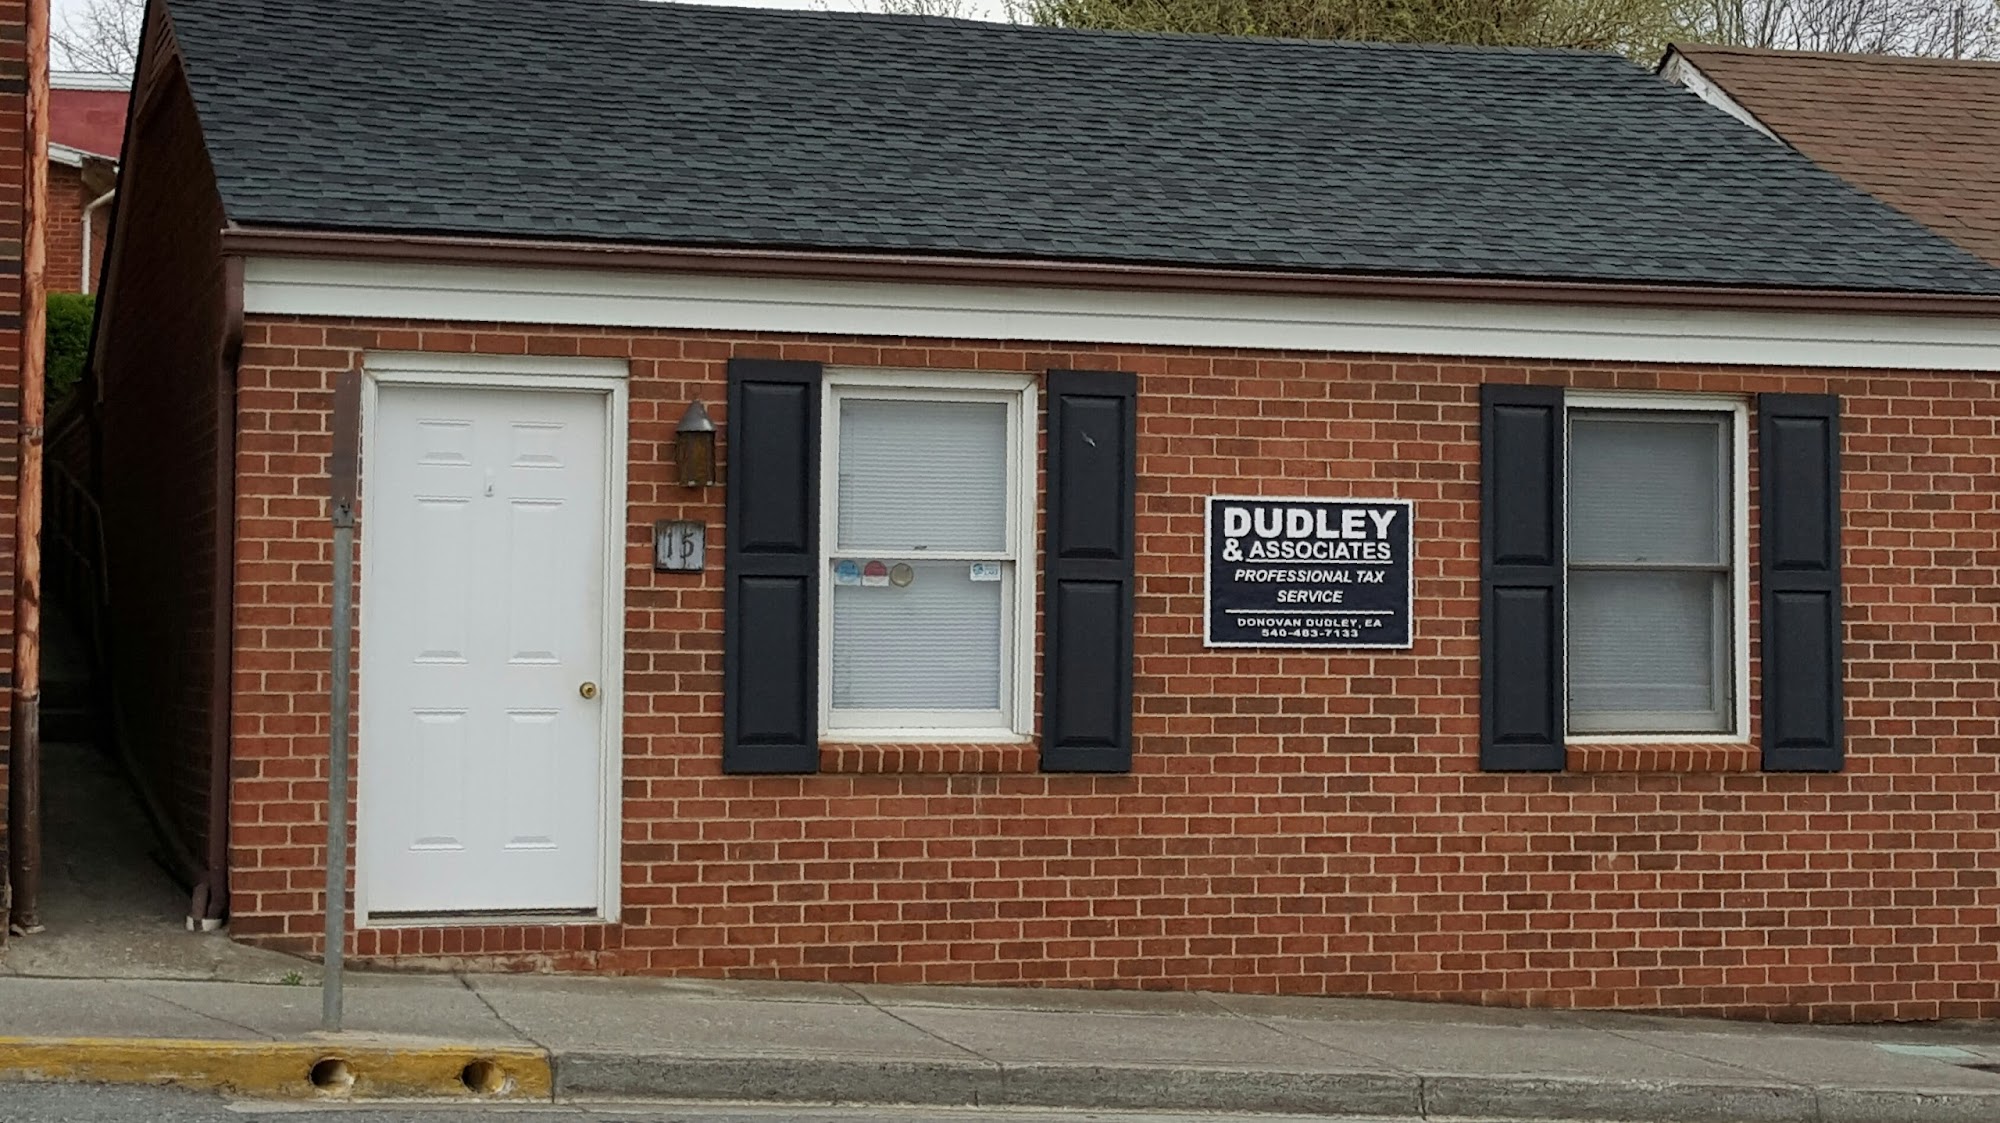 Dudley & Associates Professional Tax Service